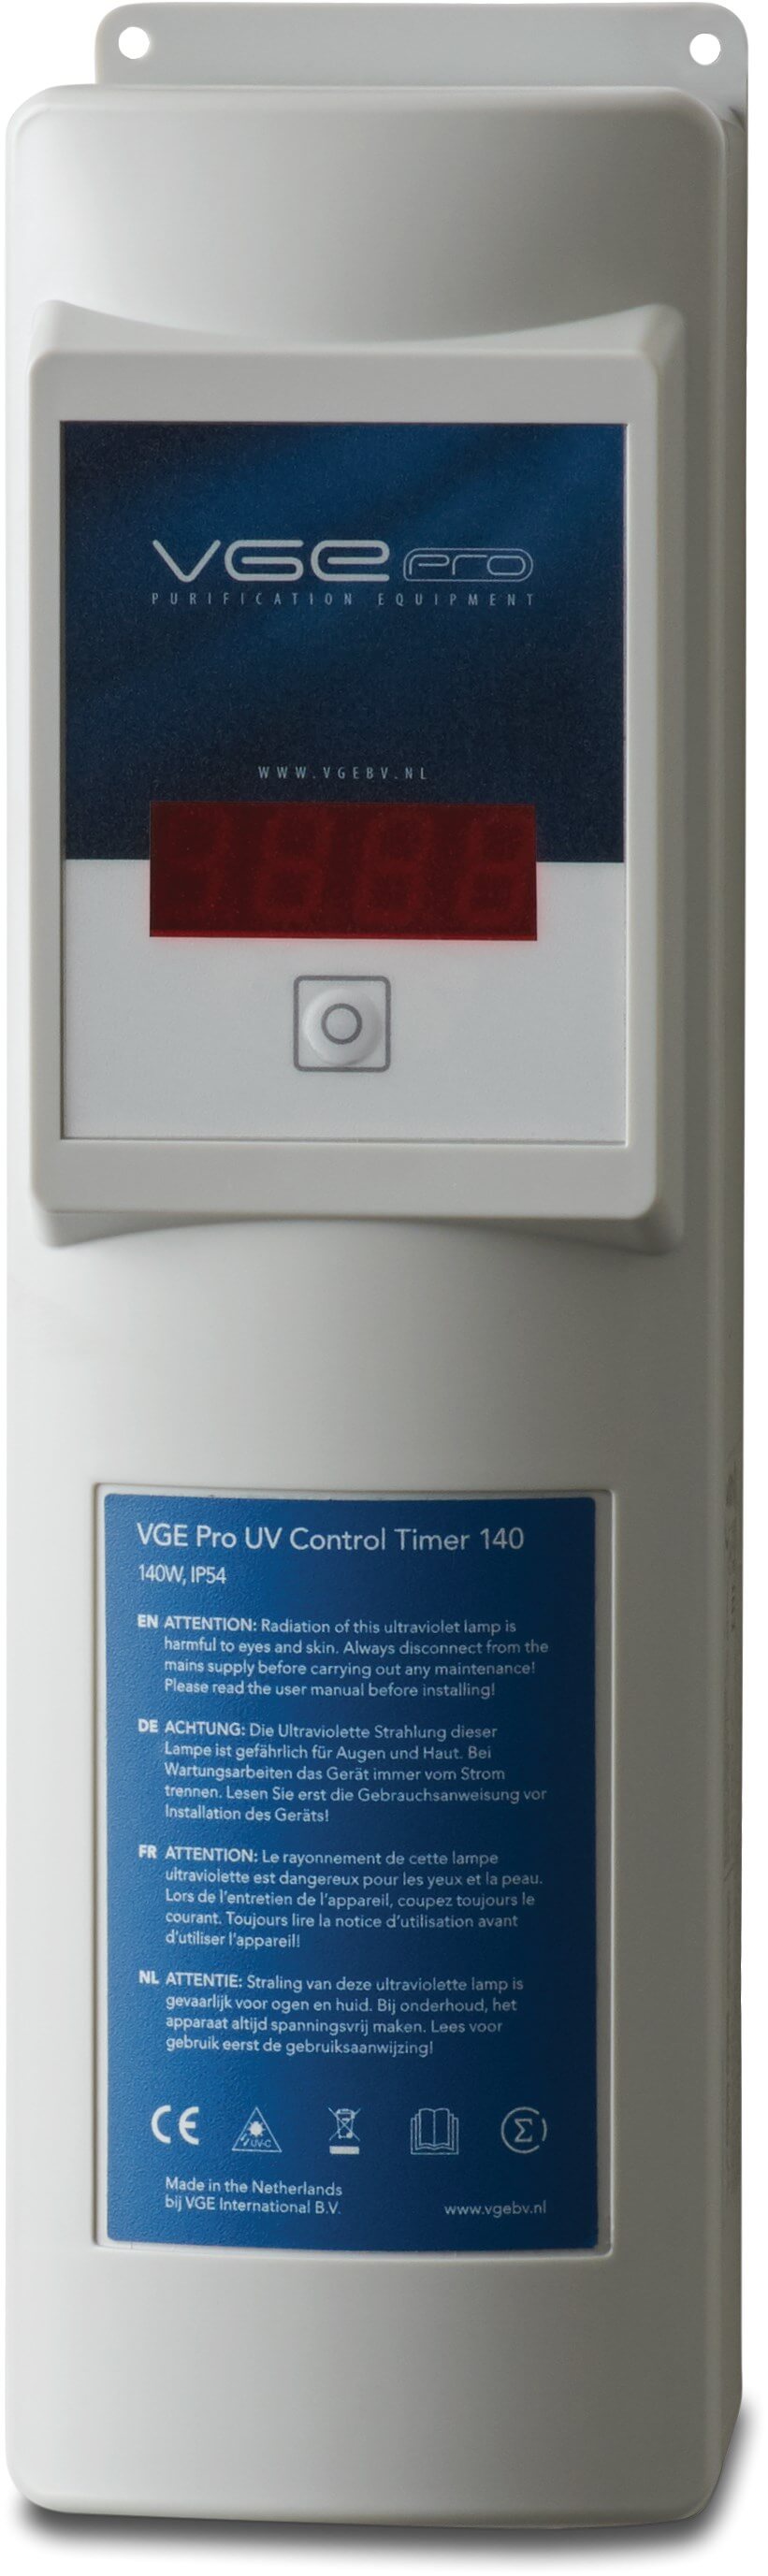 VGE Pro UV styreenhed type Timer 140